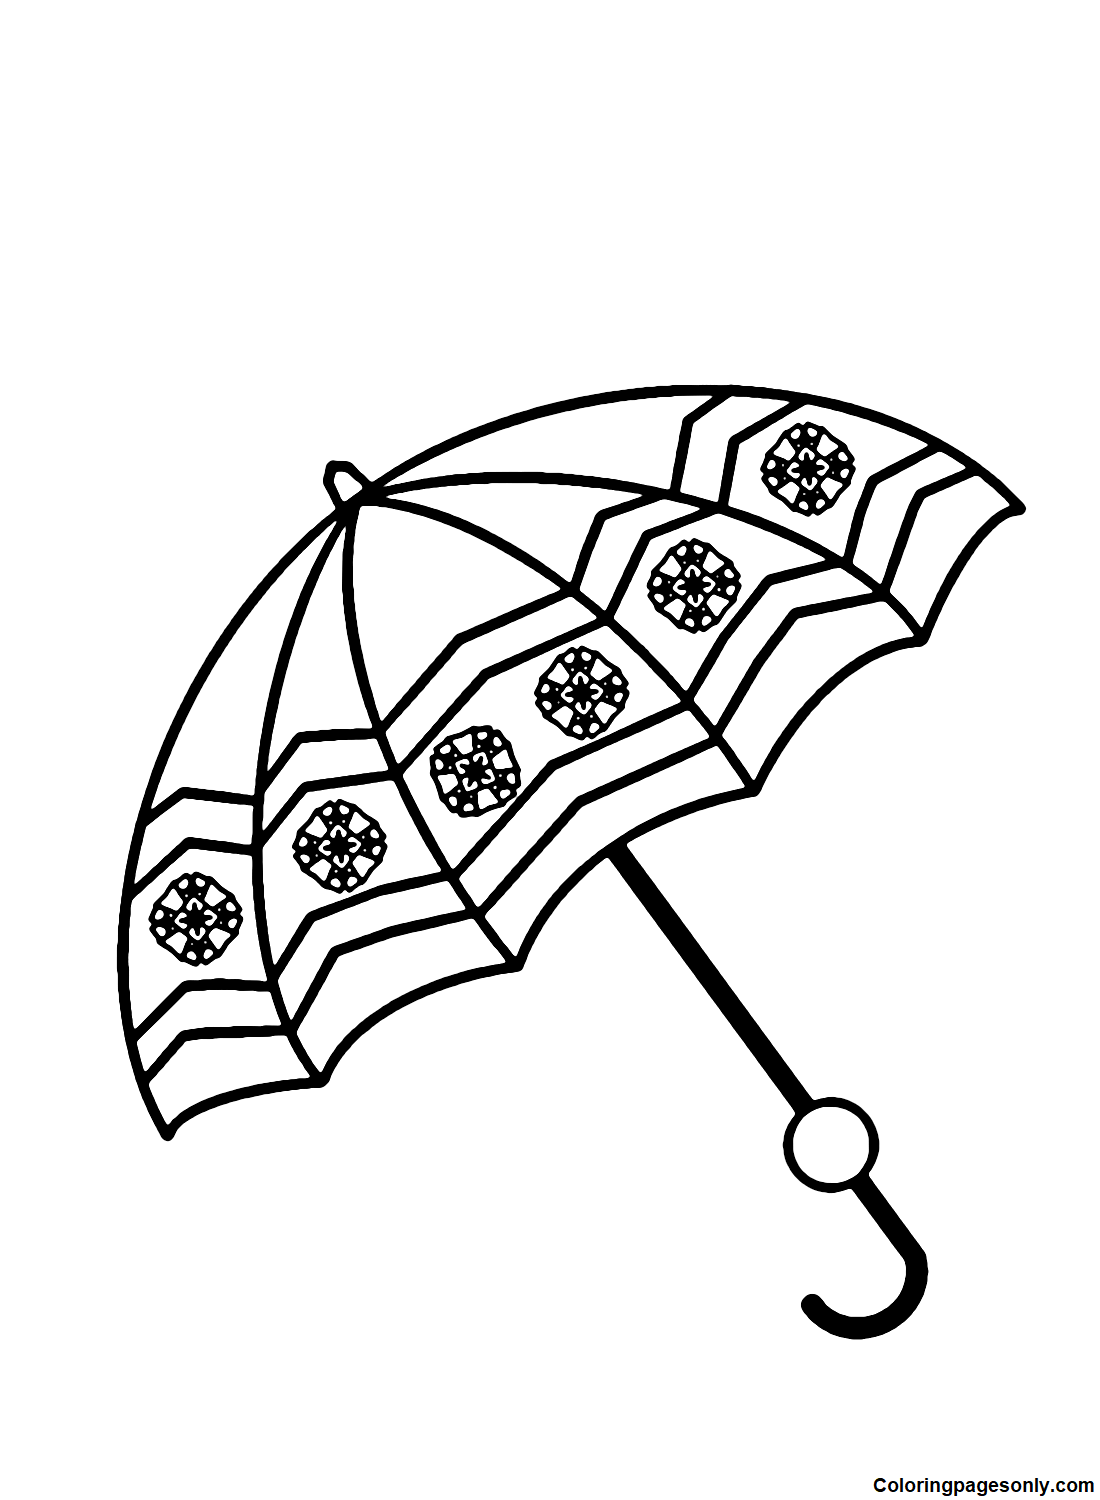 Regenschirm Easy von Umbrella